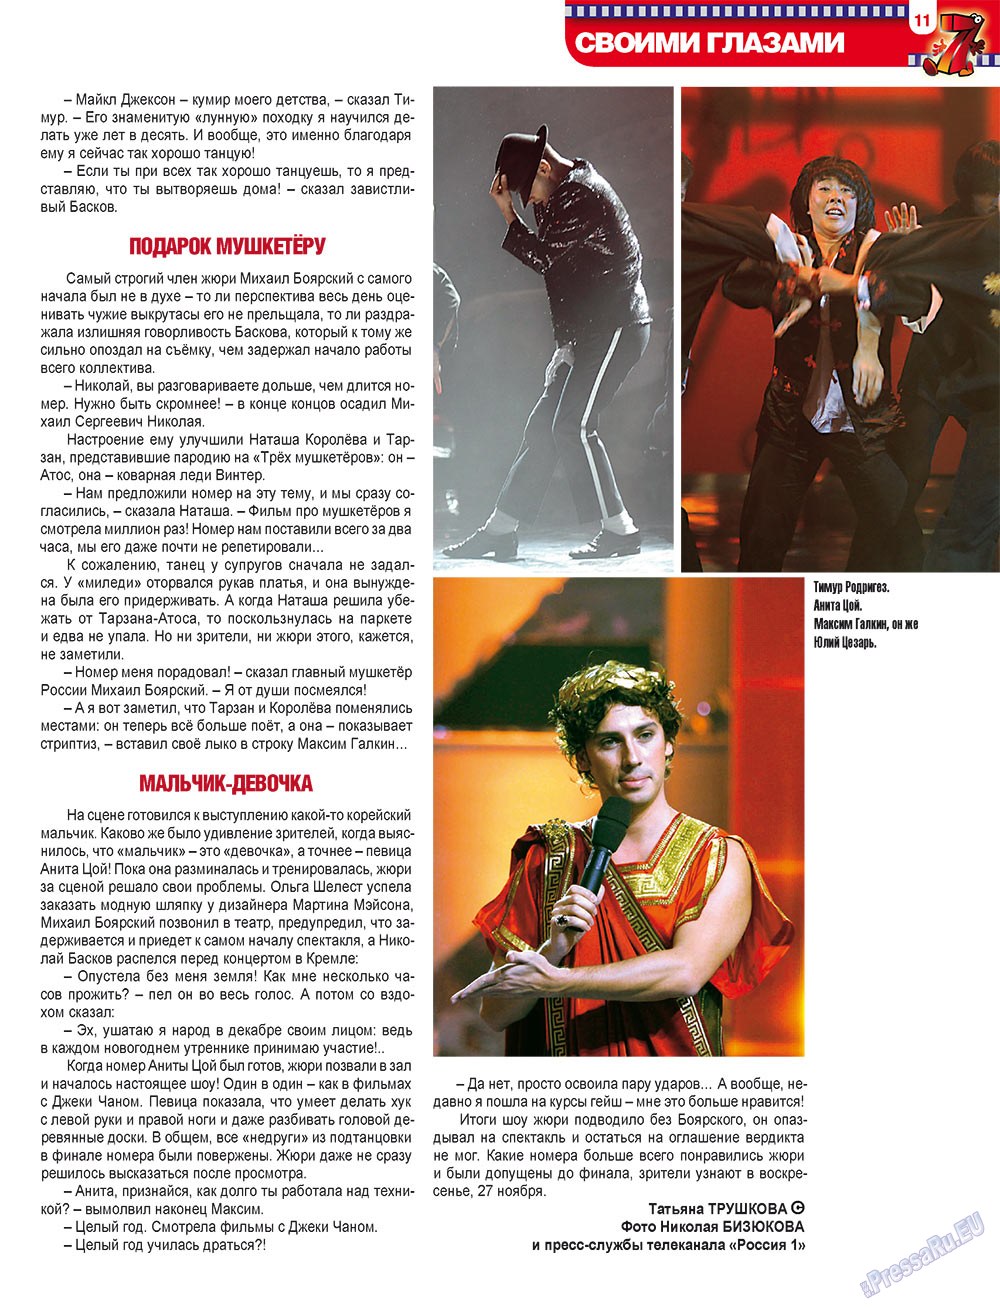 7плюс7я (журнал). 2011 год, номер 47, стр. 11